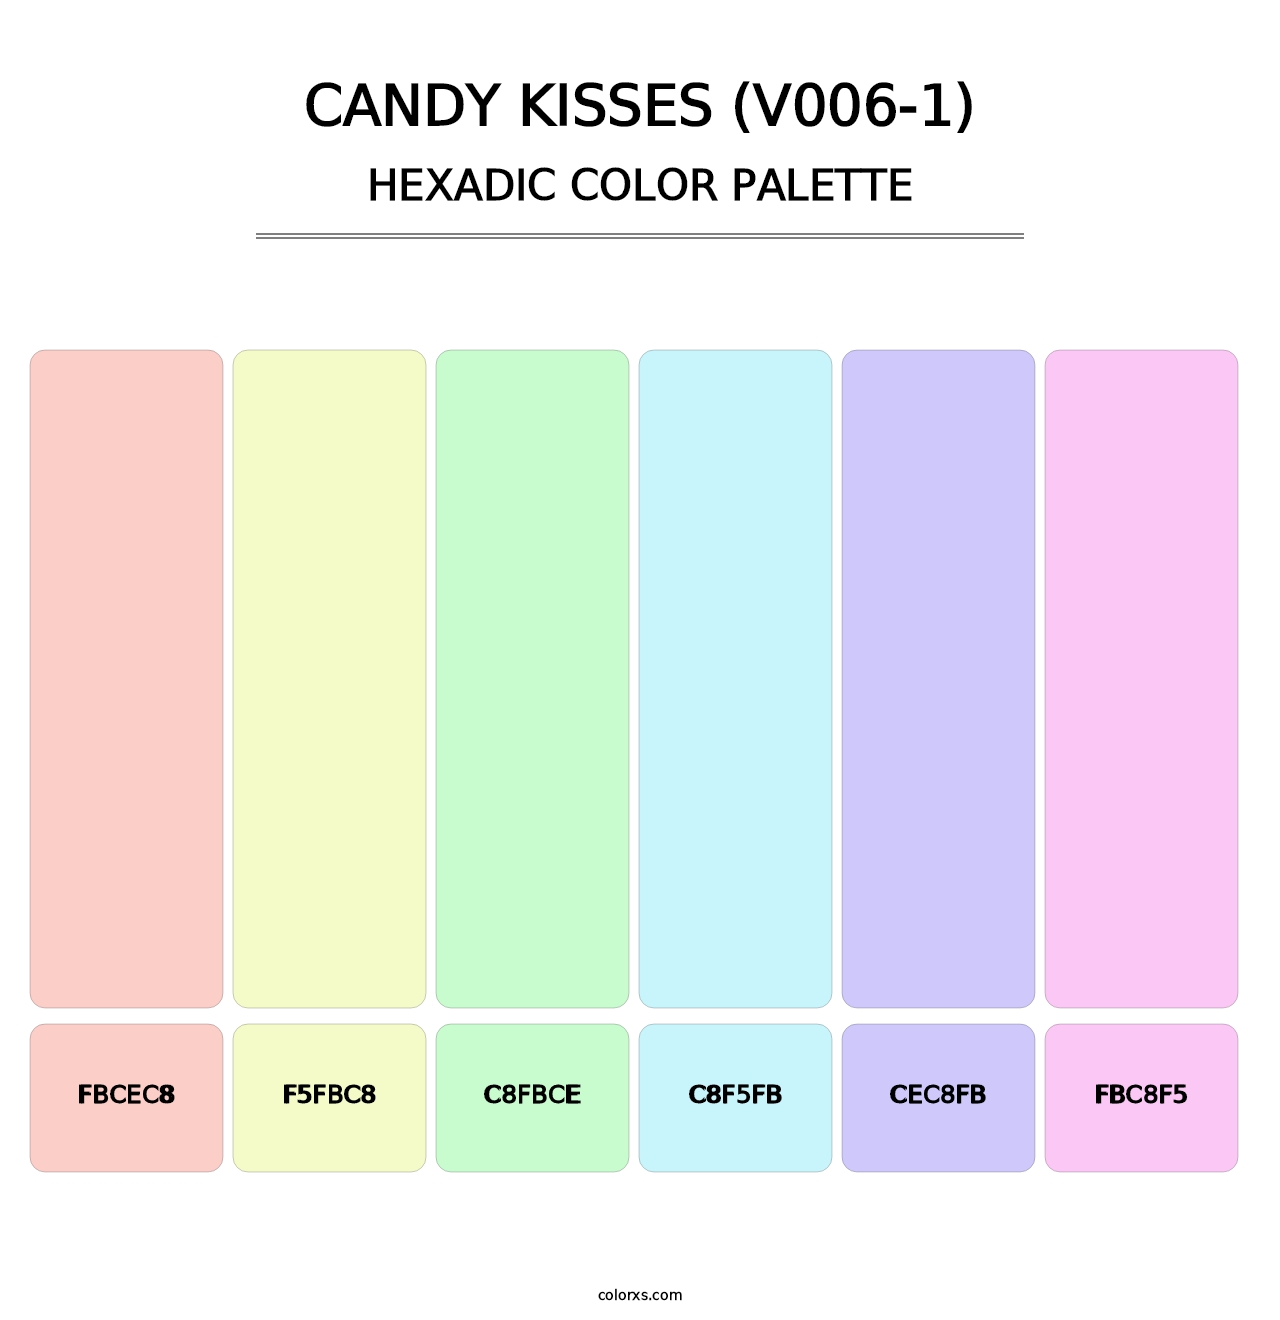 Candy Kisses (V006-1) - Hexadic Color Palette